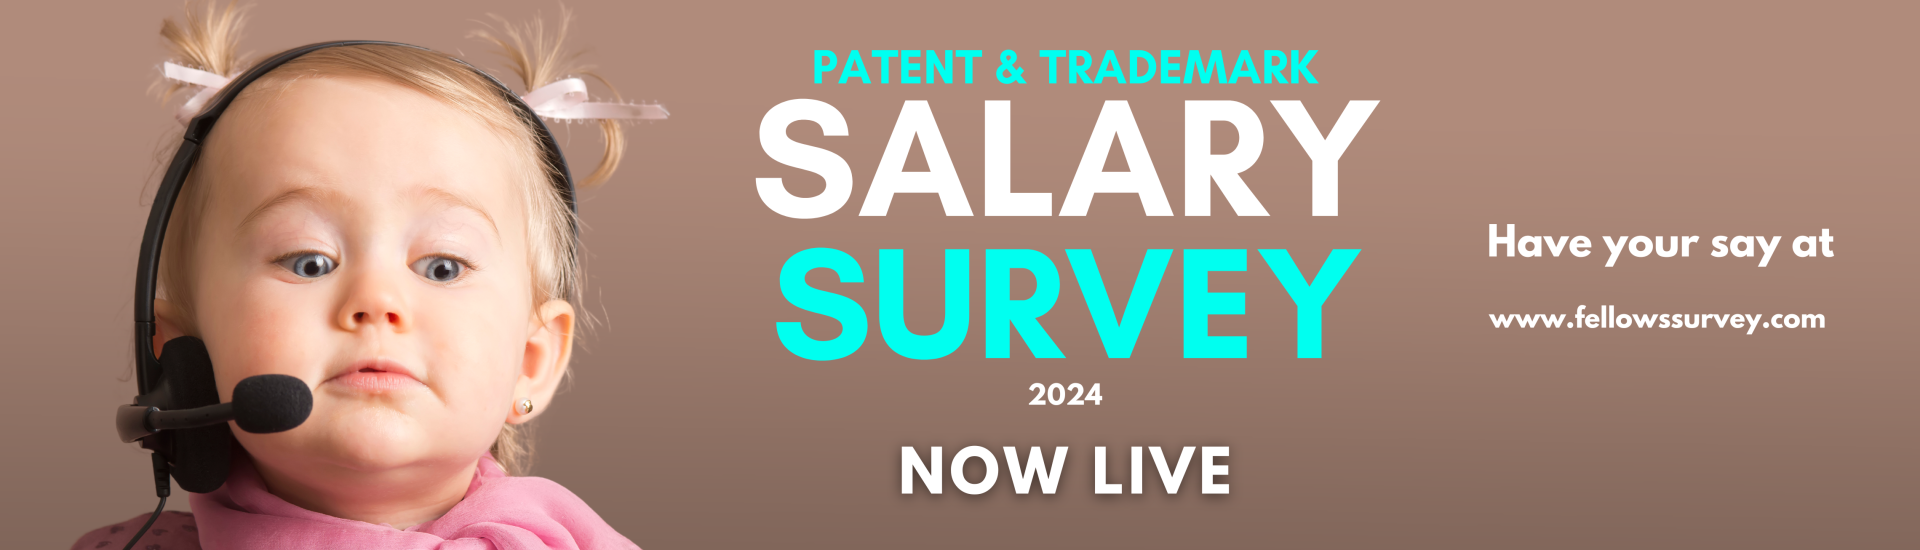 Patent and Trademark Salary Survey